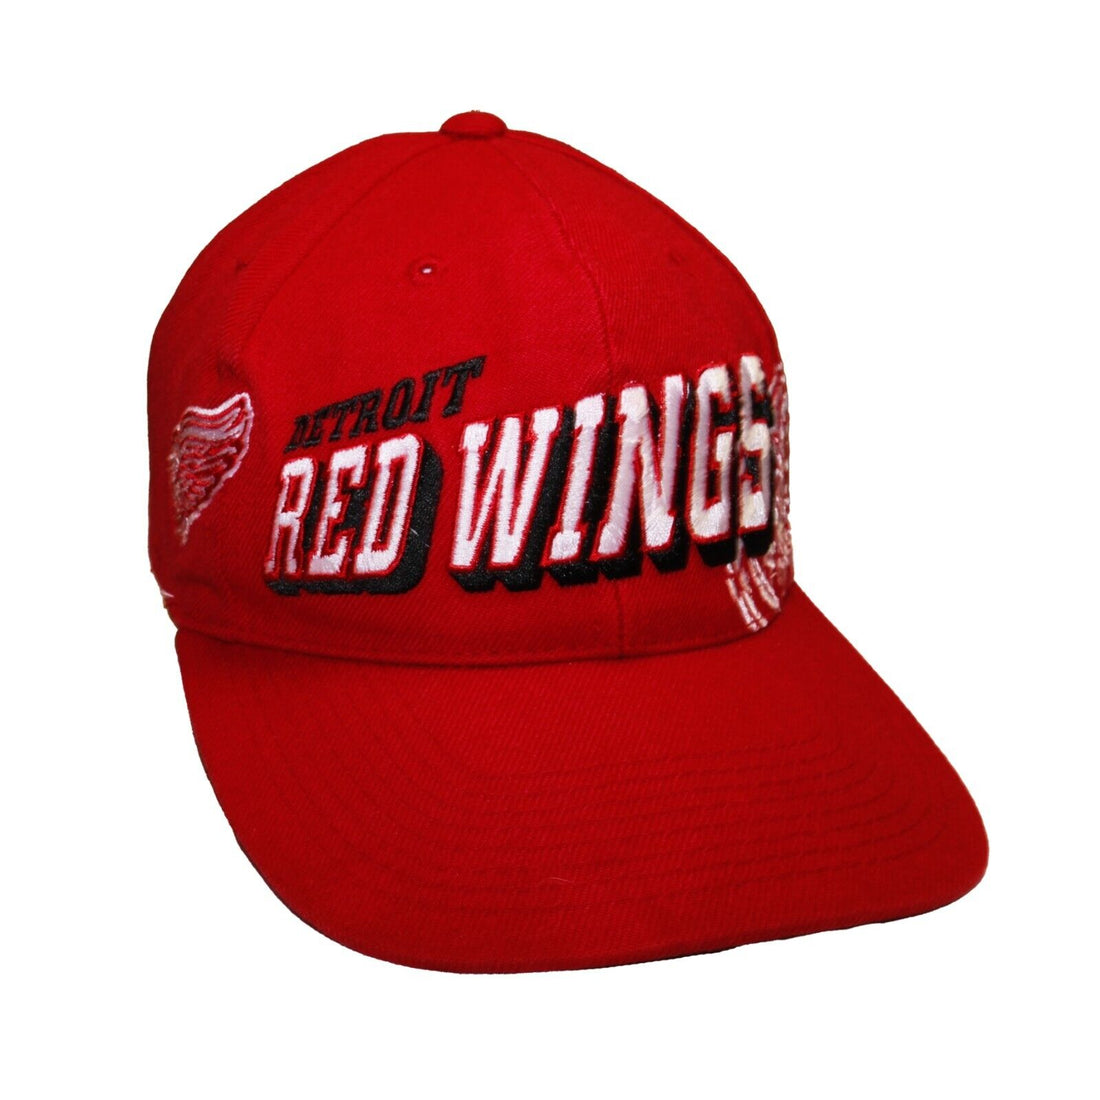 Vintage Winnipeg Jets Hat 90s Sports Specialties Snapback Cap 